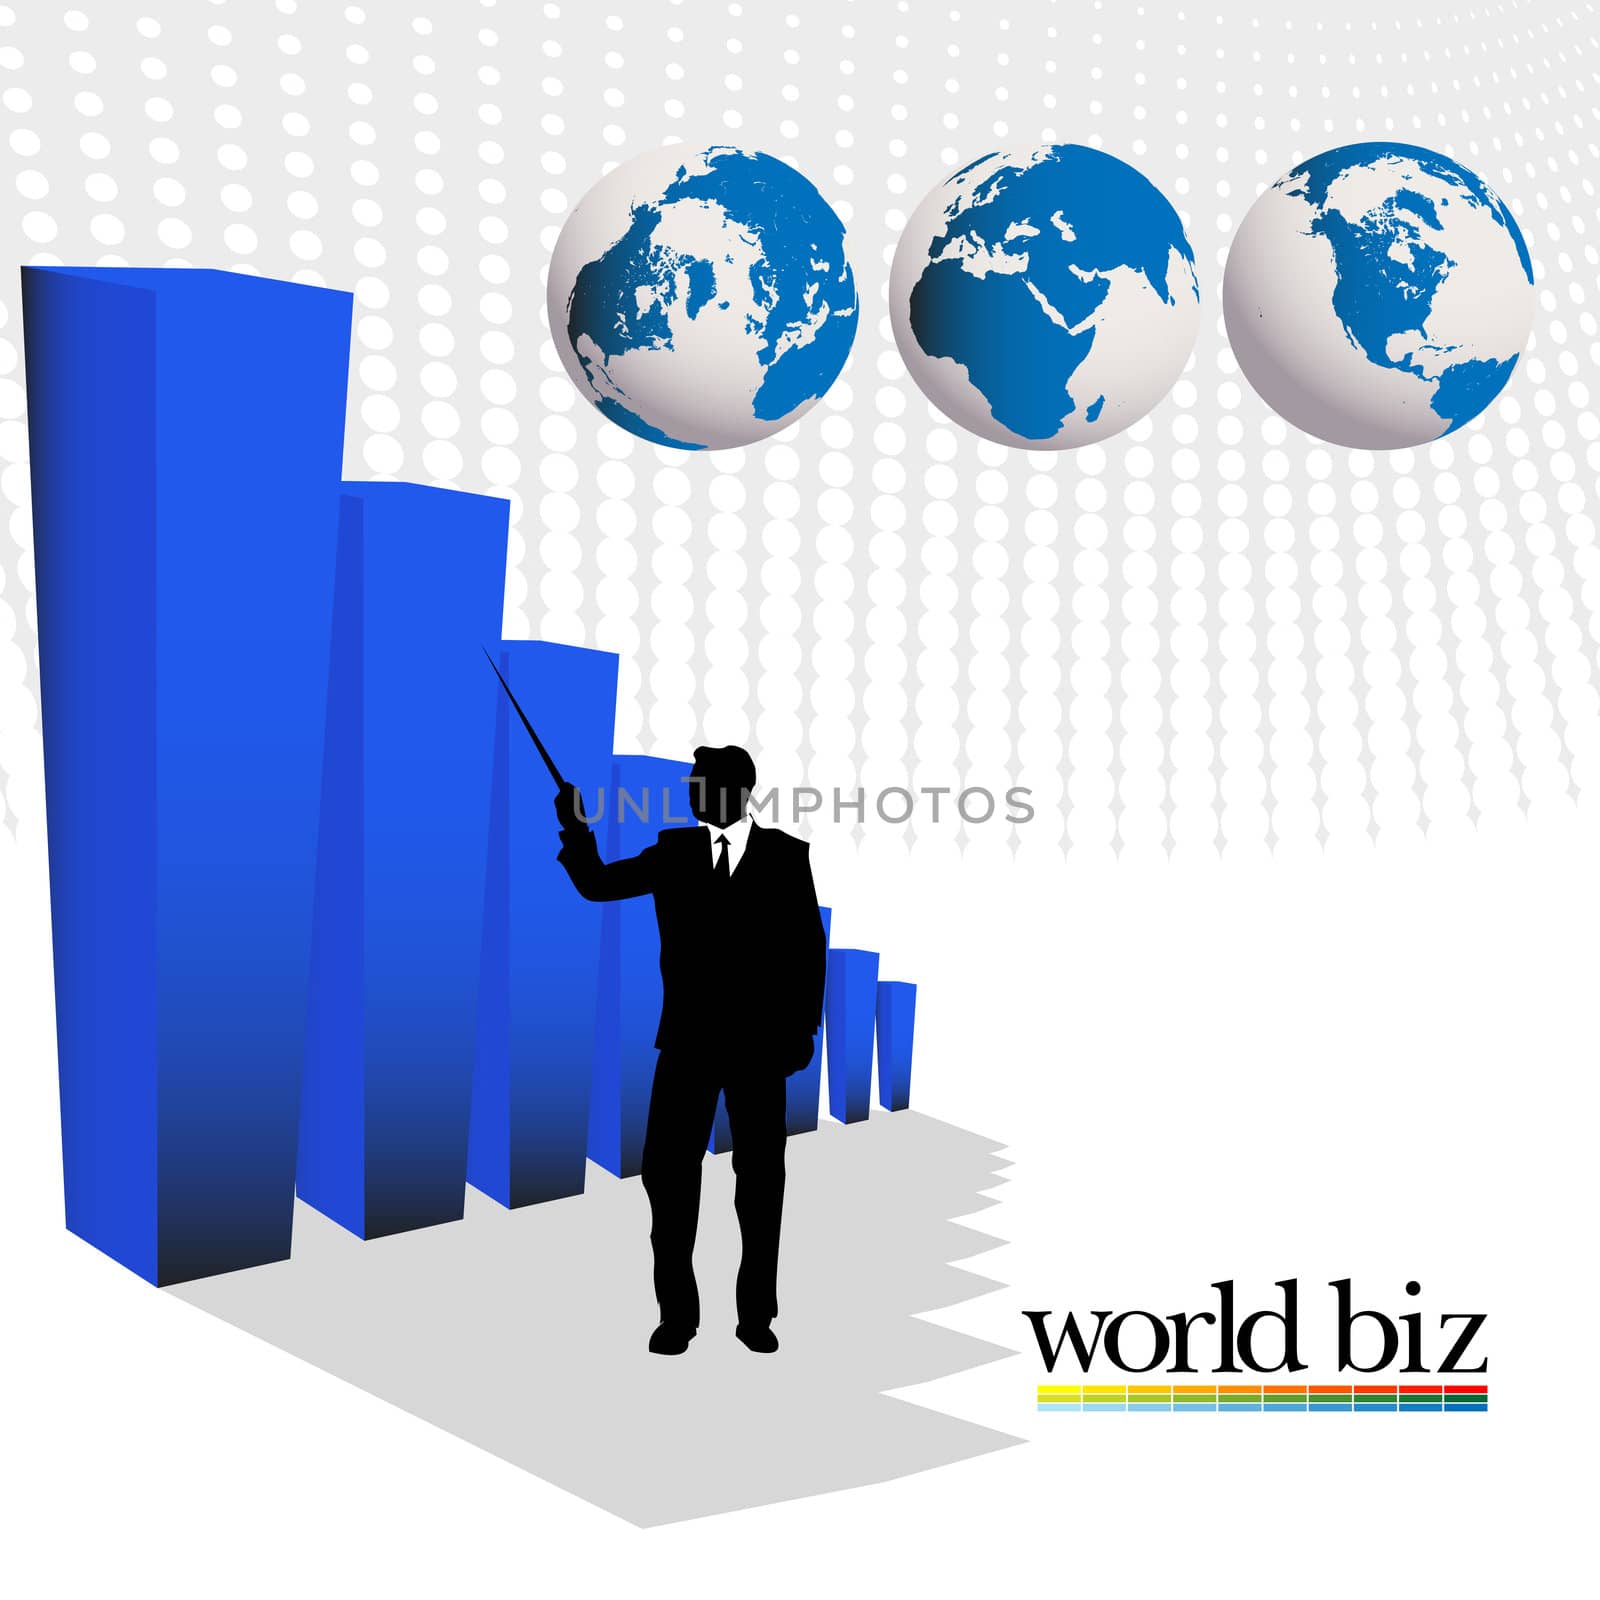 world biz by Lirch